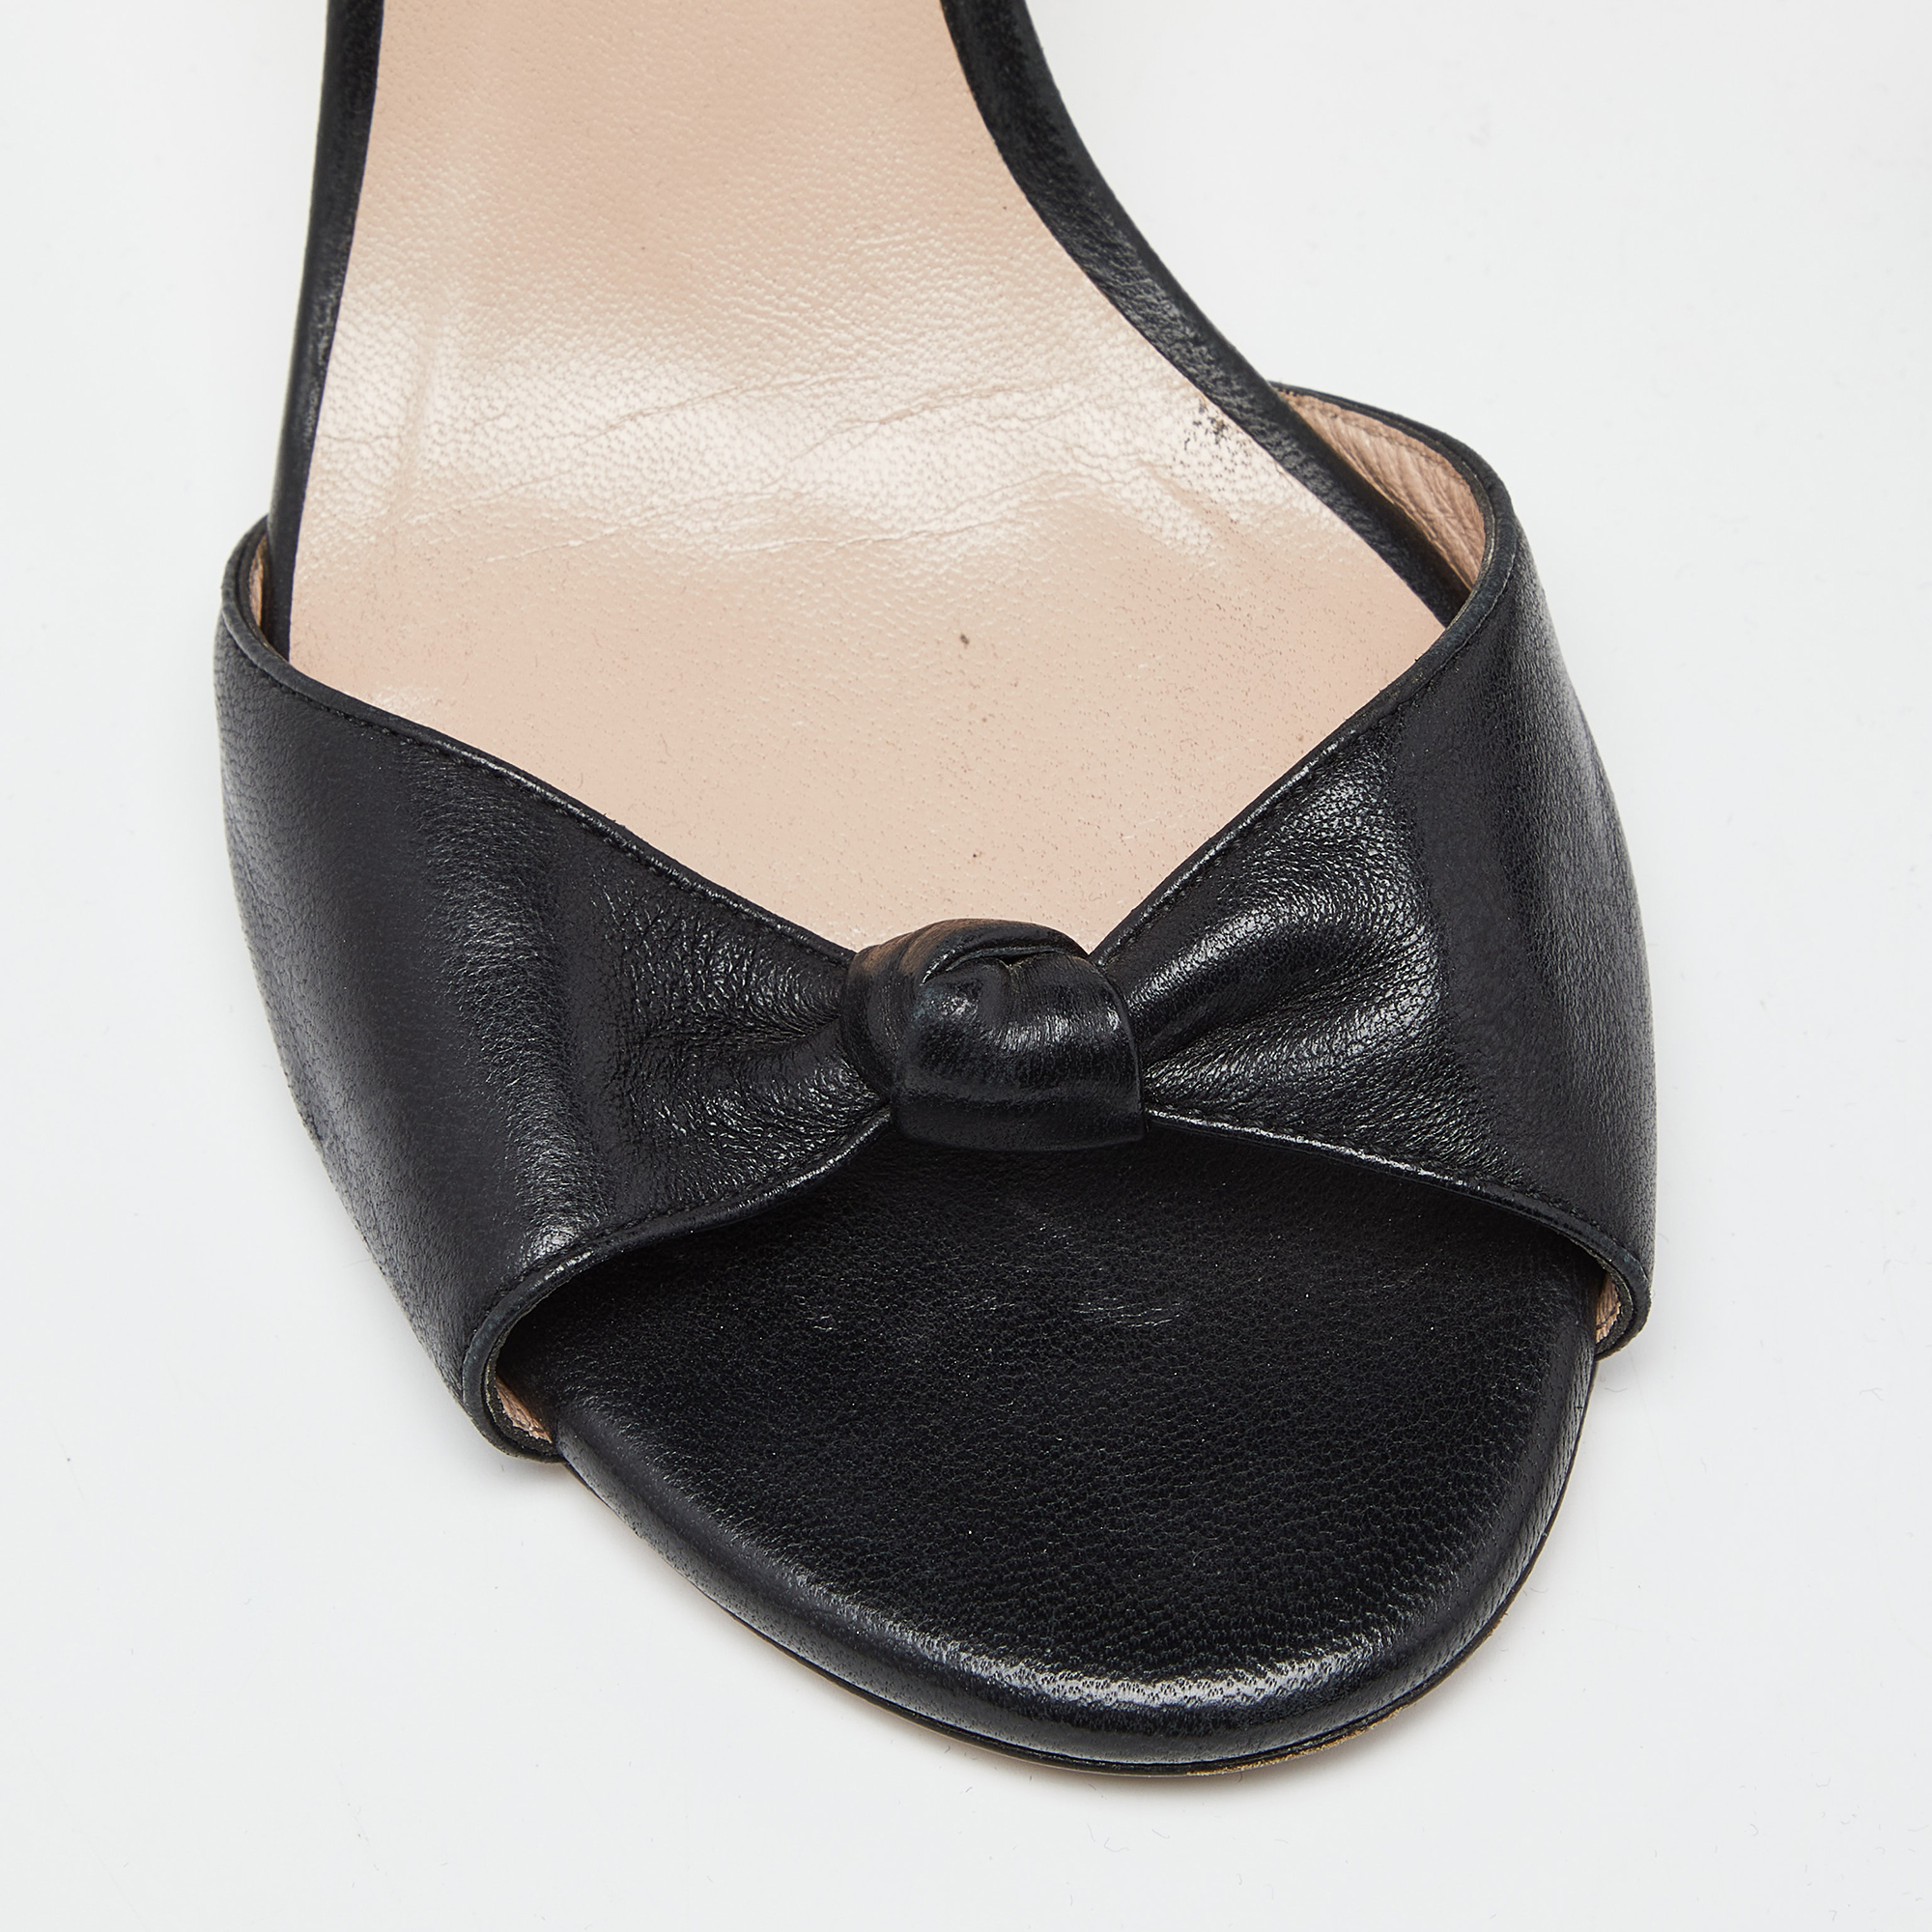 Stuart Weitzman Black Leather Ankle Strap Sandals Size 38.5